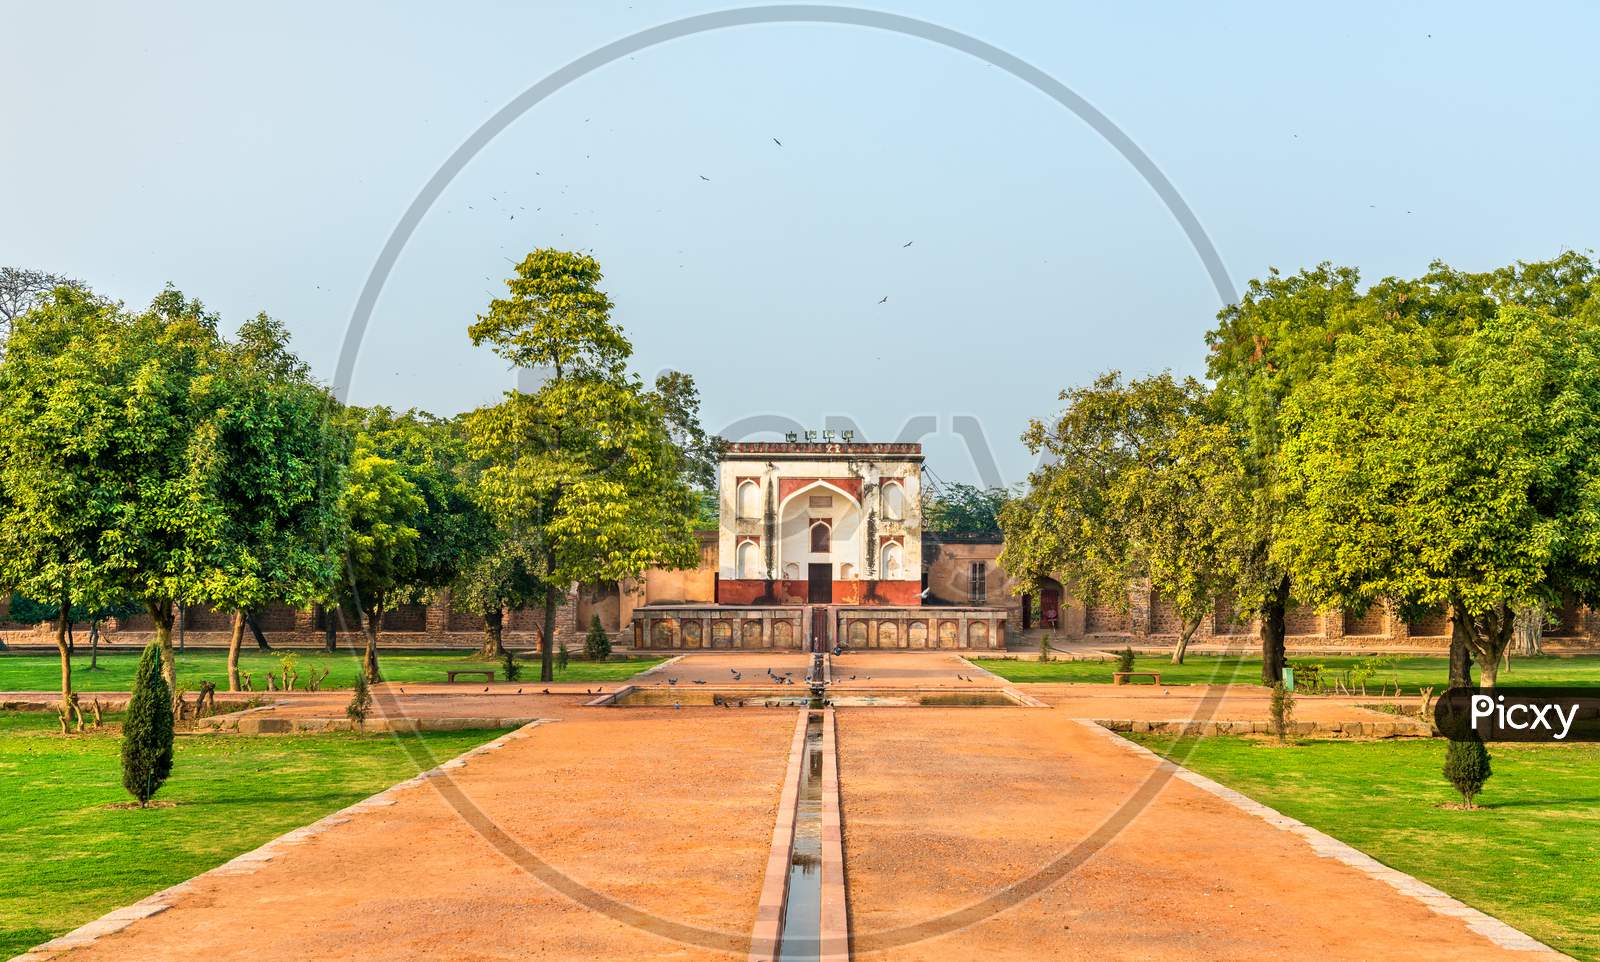 North Gate Of The Humayun Tomb Complex In Delhi, India